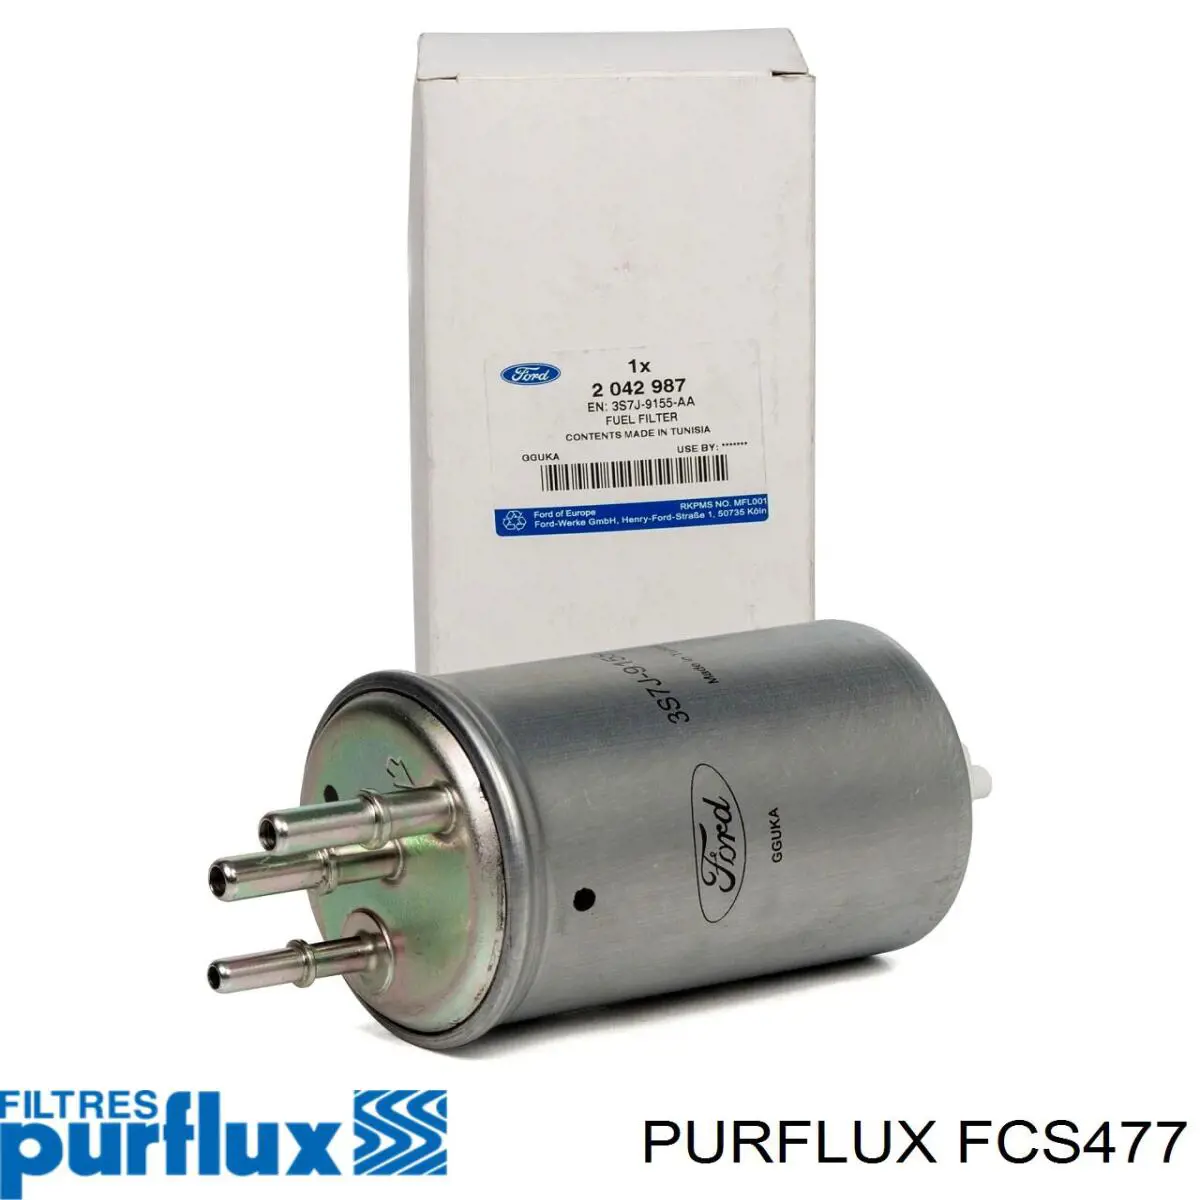 FCS477 Purflux filtro combustible